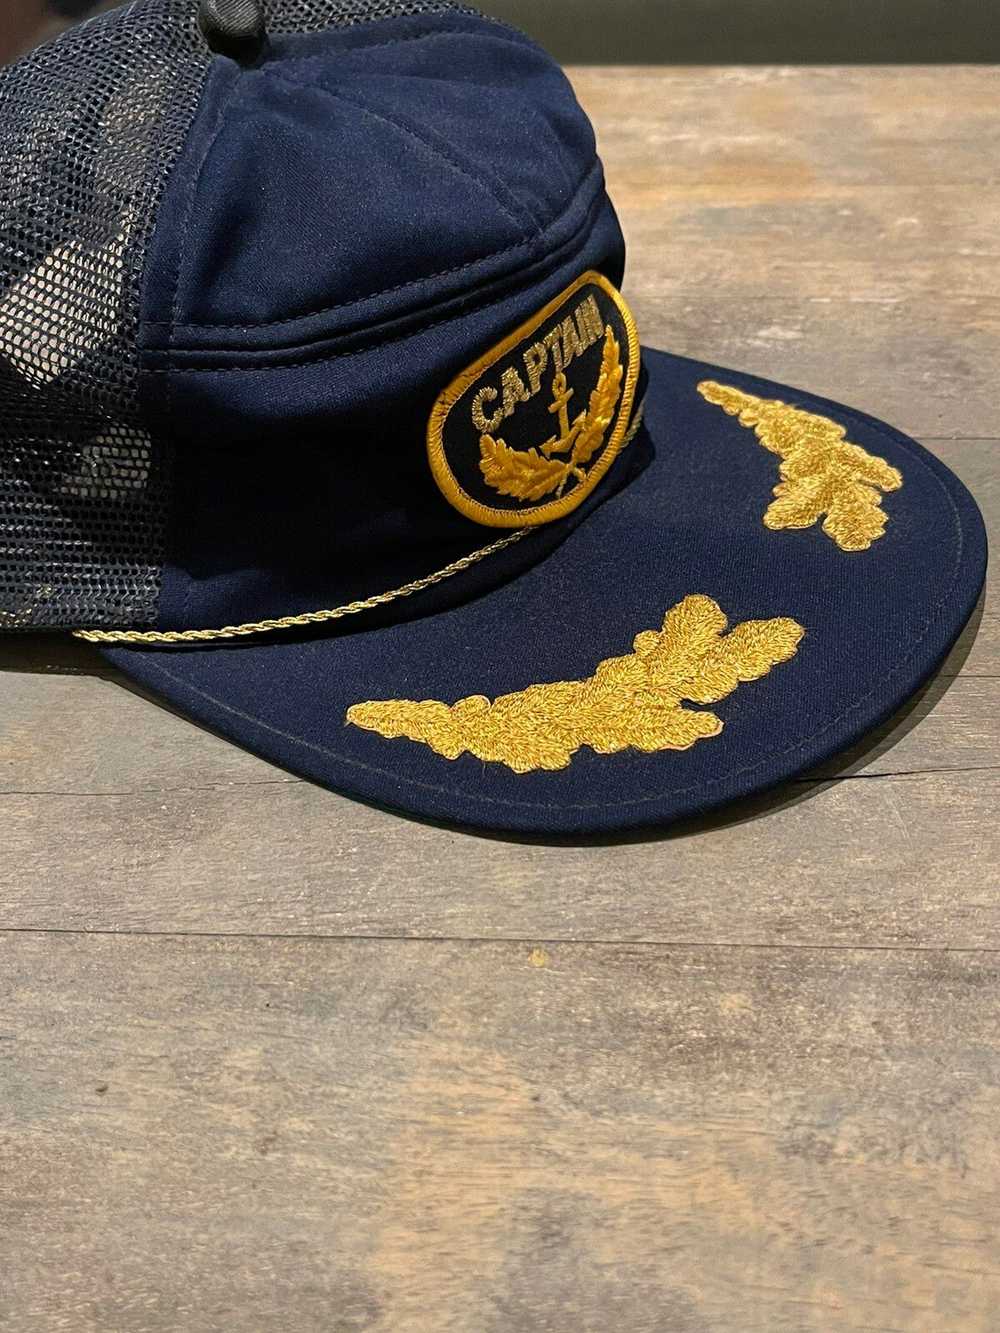 Vintage Vintage captain hat - image 2